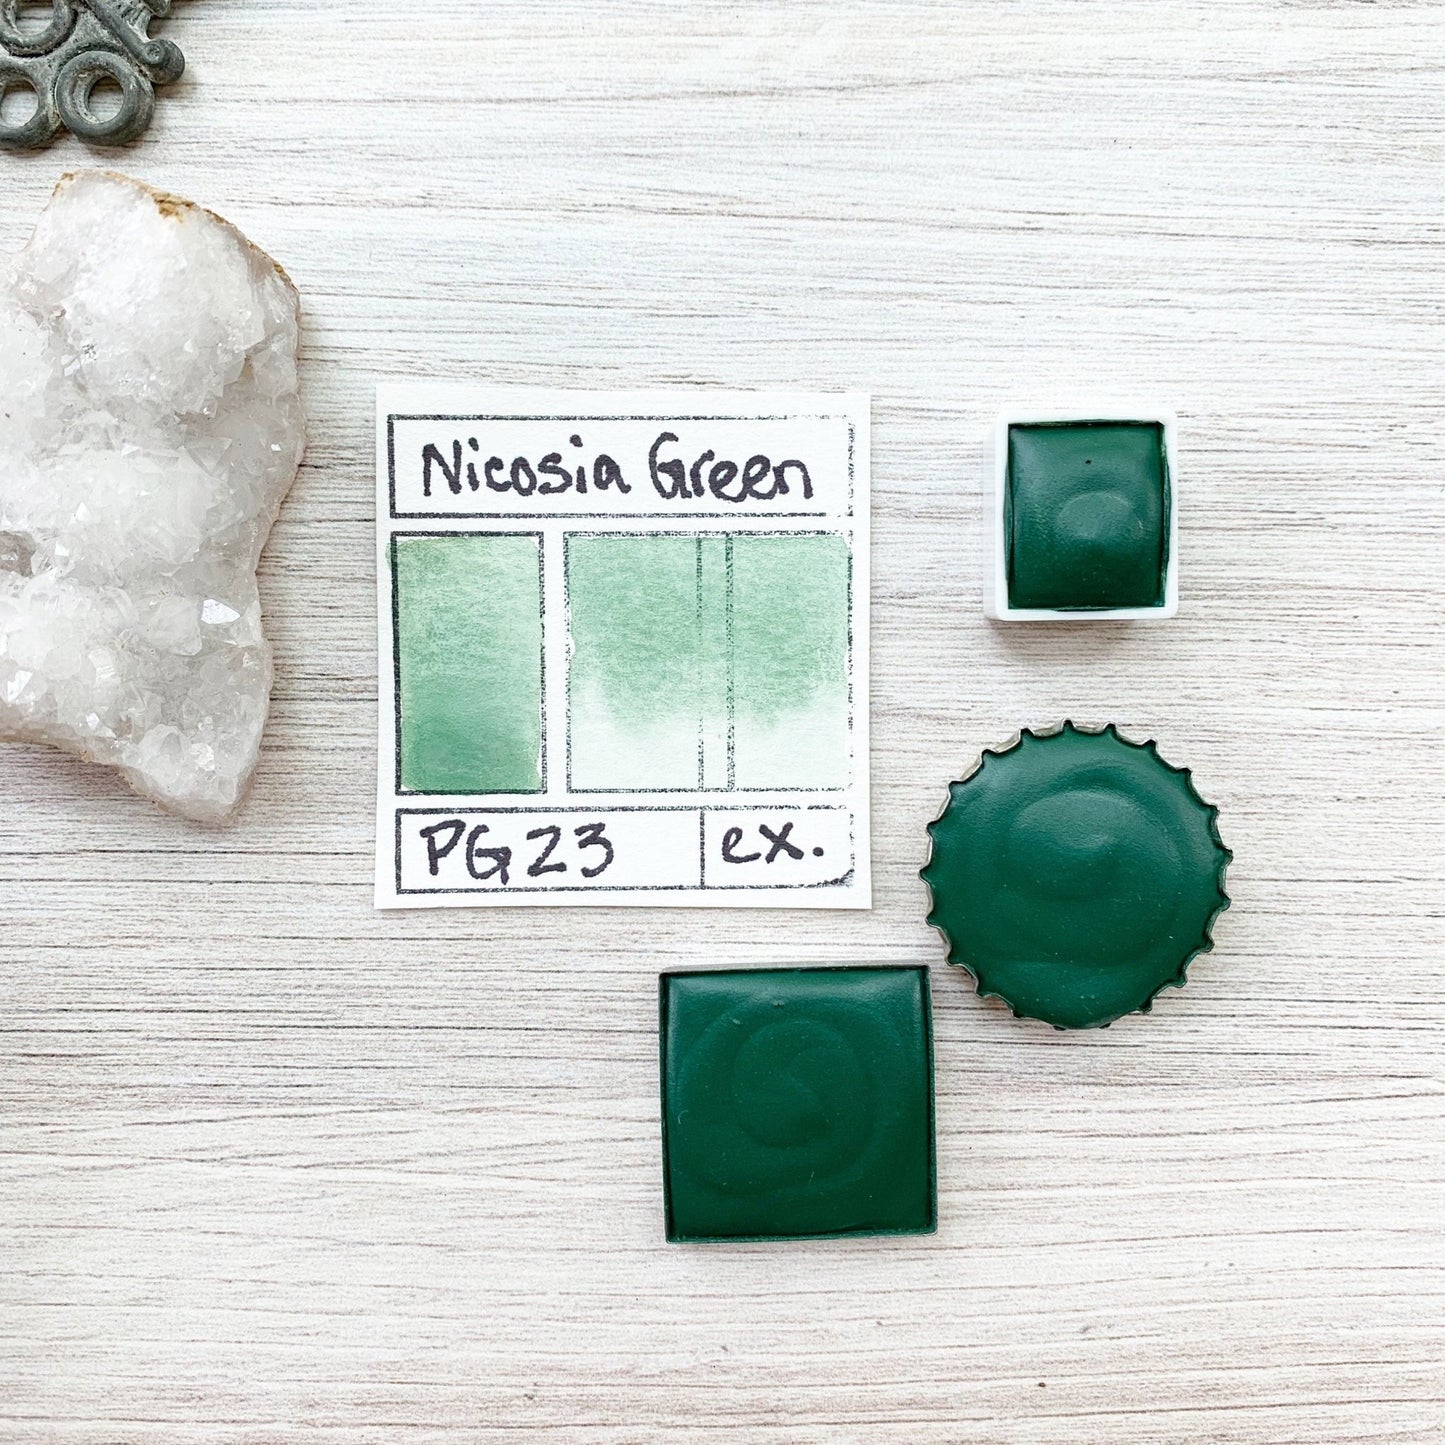 Nicosia Green Earth. Half pan, full pan or bottle cap of handmade watercolor paint